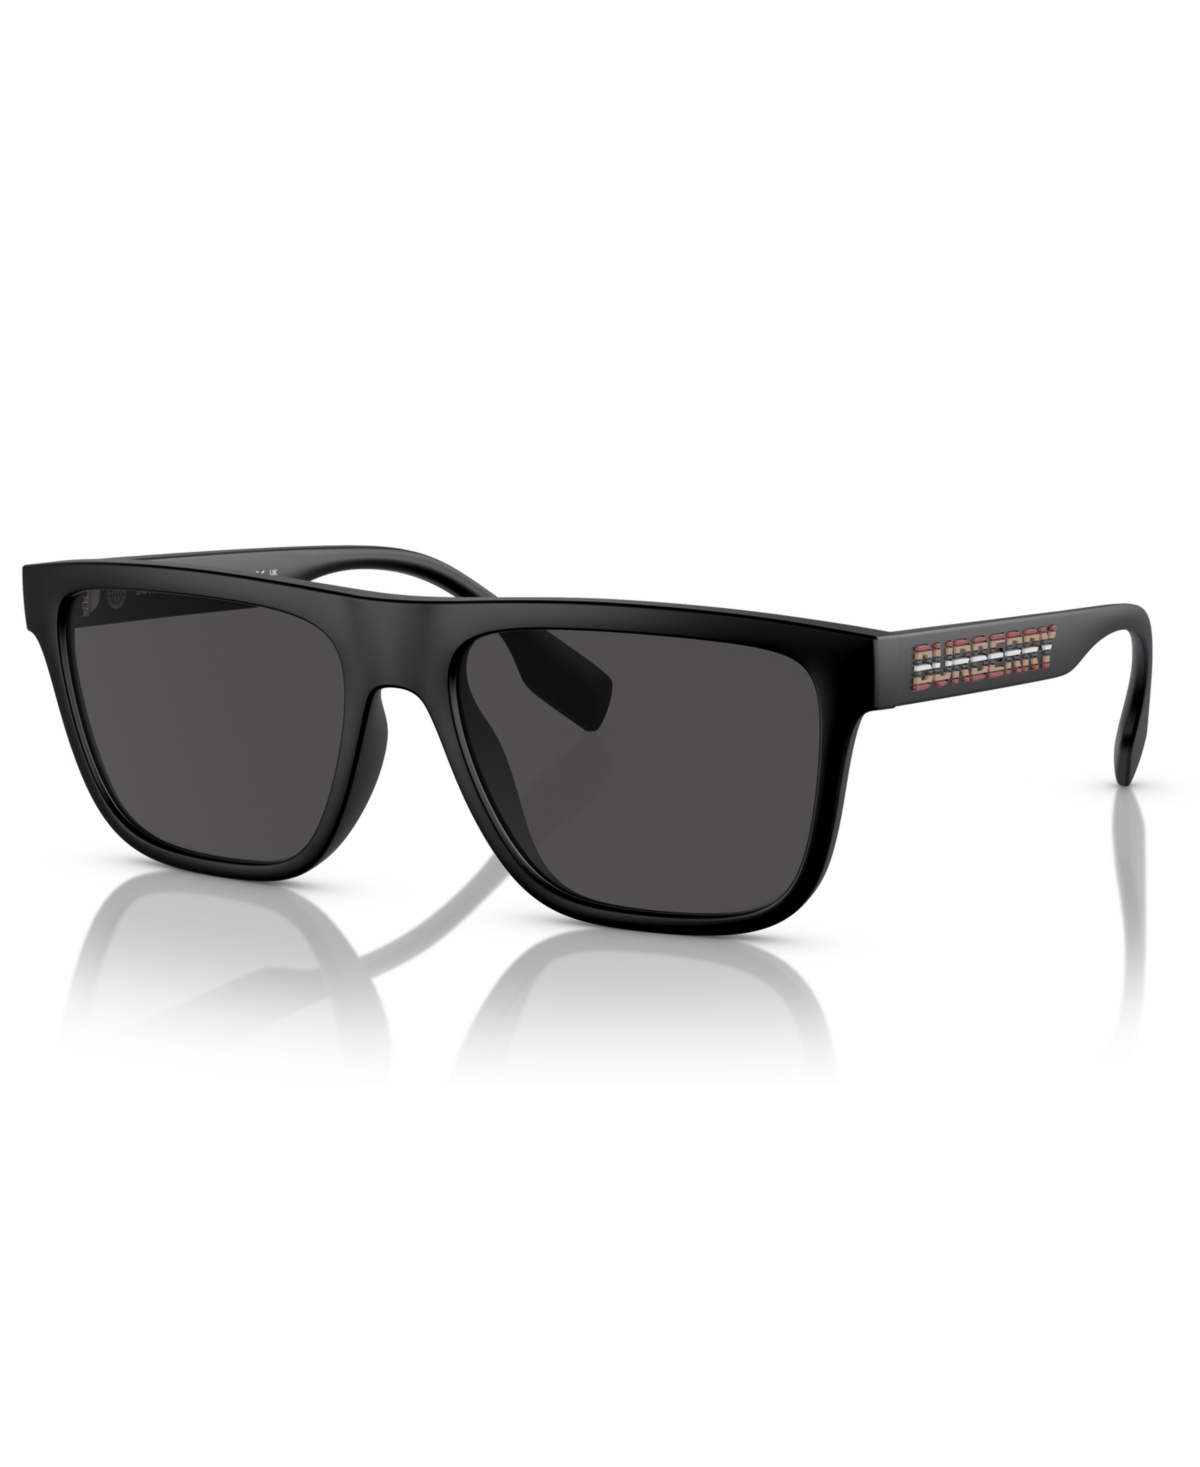 Men's Sunglasses BE4402U - Matte Black